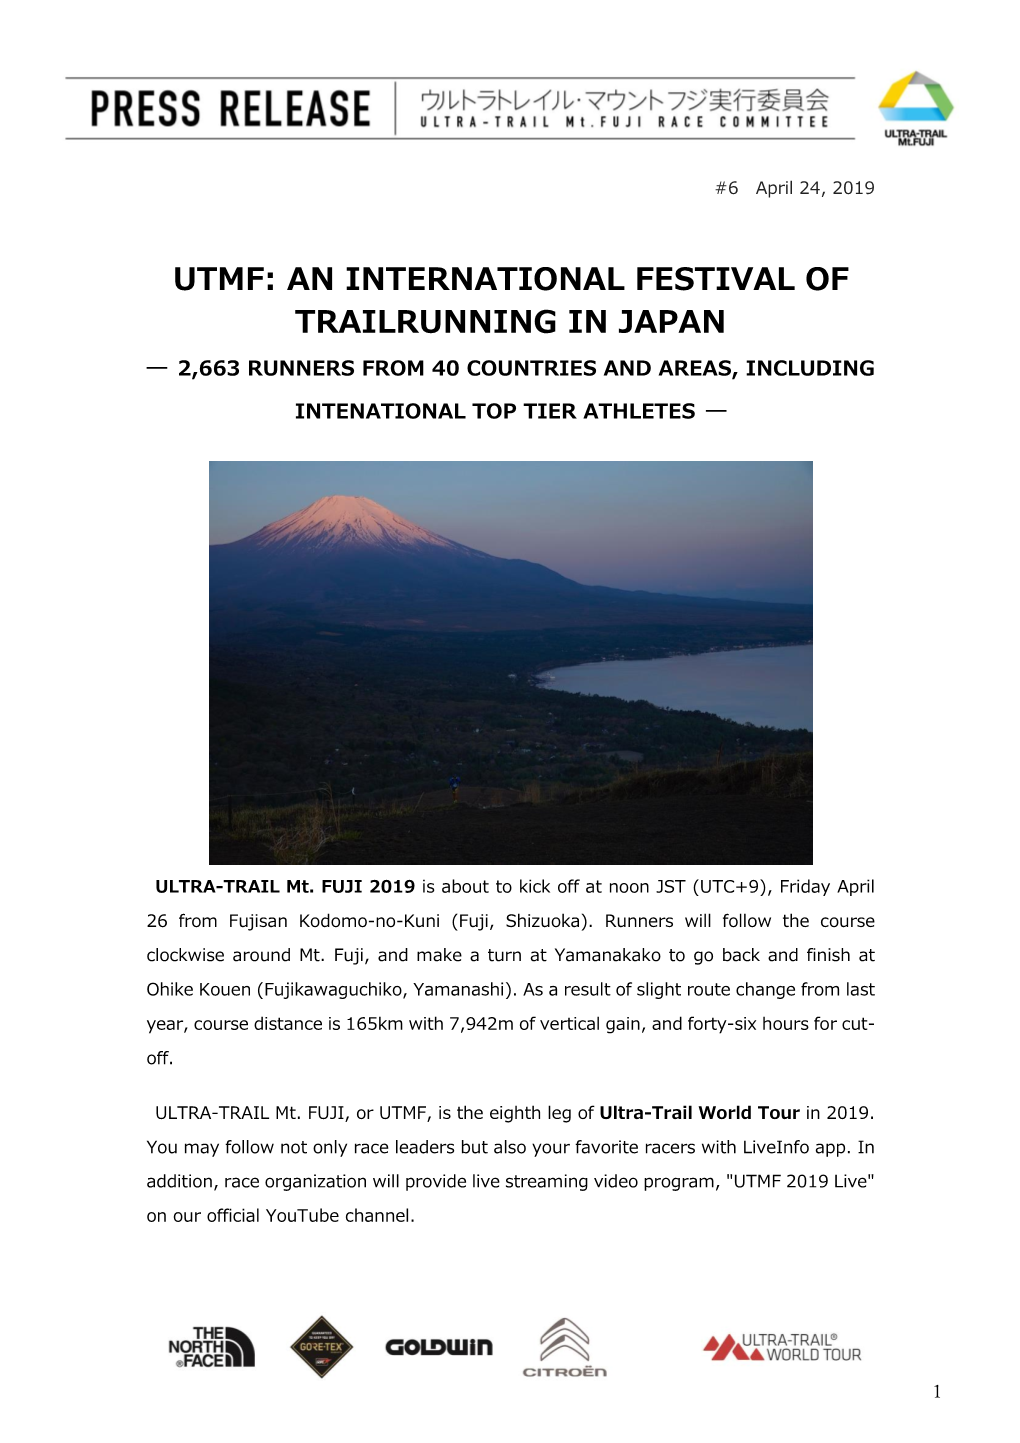 An International Festival of Trailrunning in Japan